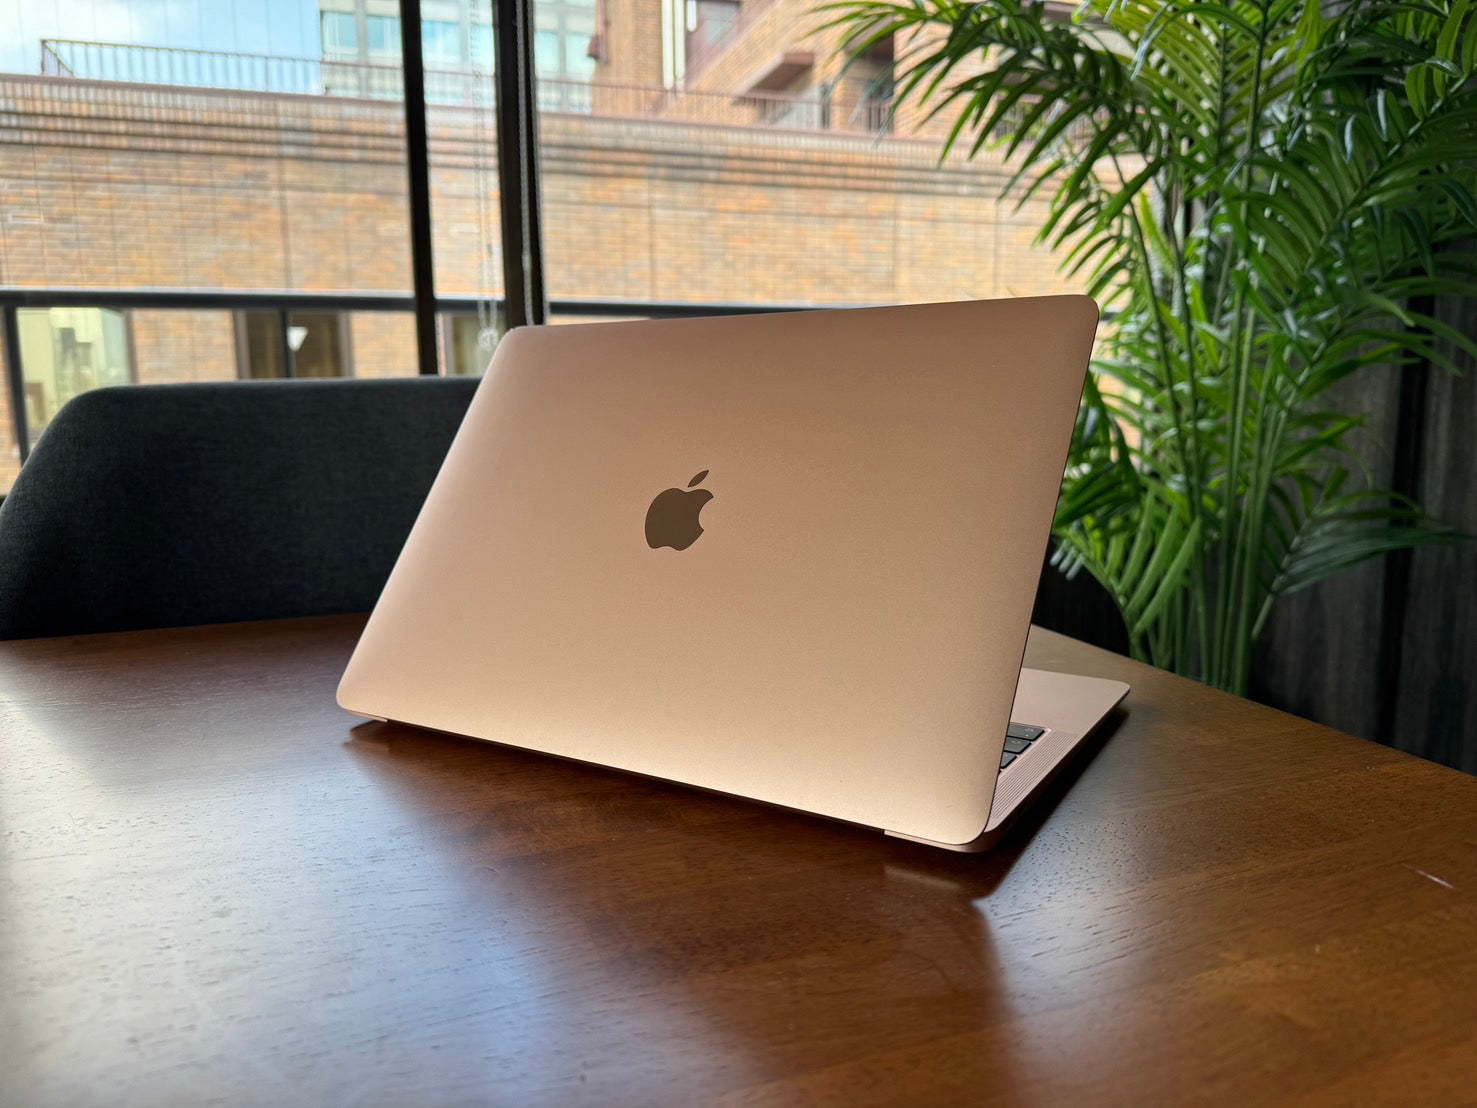 Cランク】Apple MacBook Air Retina 2019 Core i5 メモリ:16GB SSD:128GB